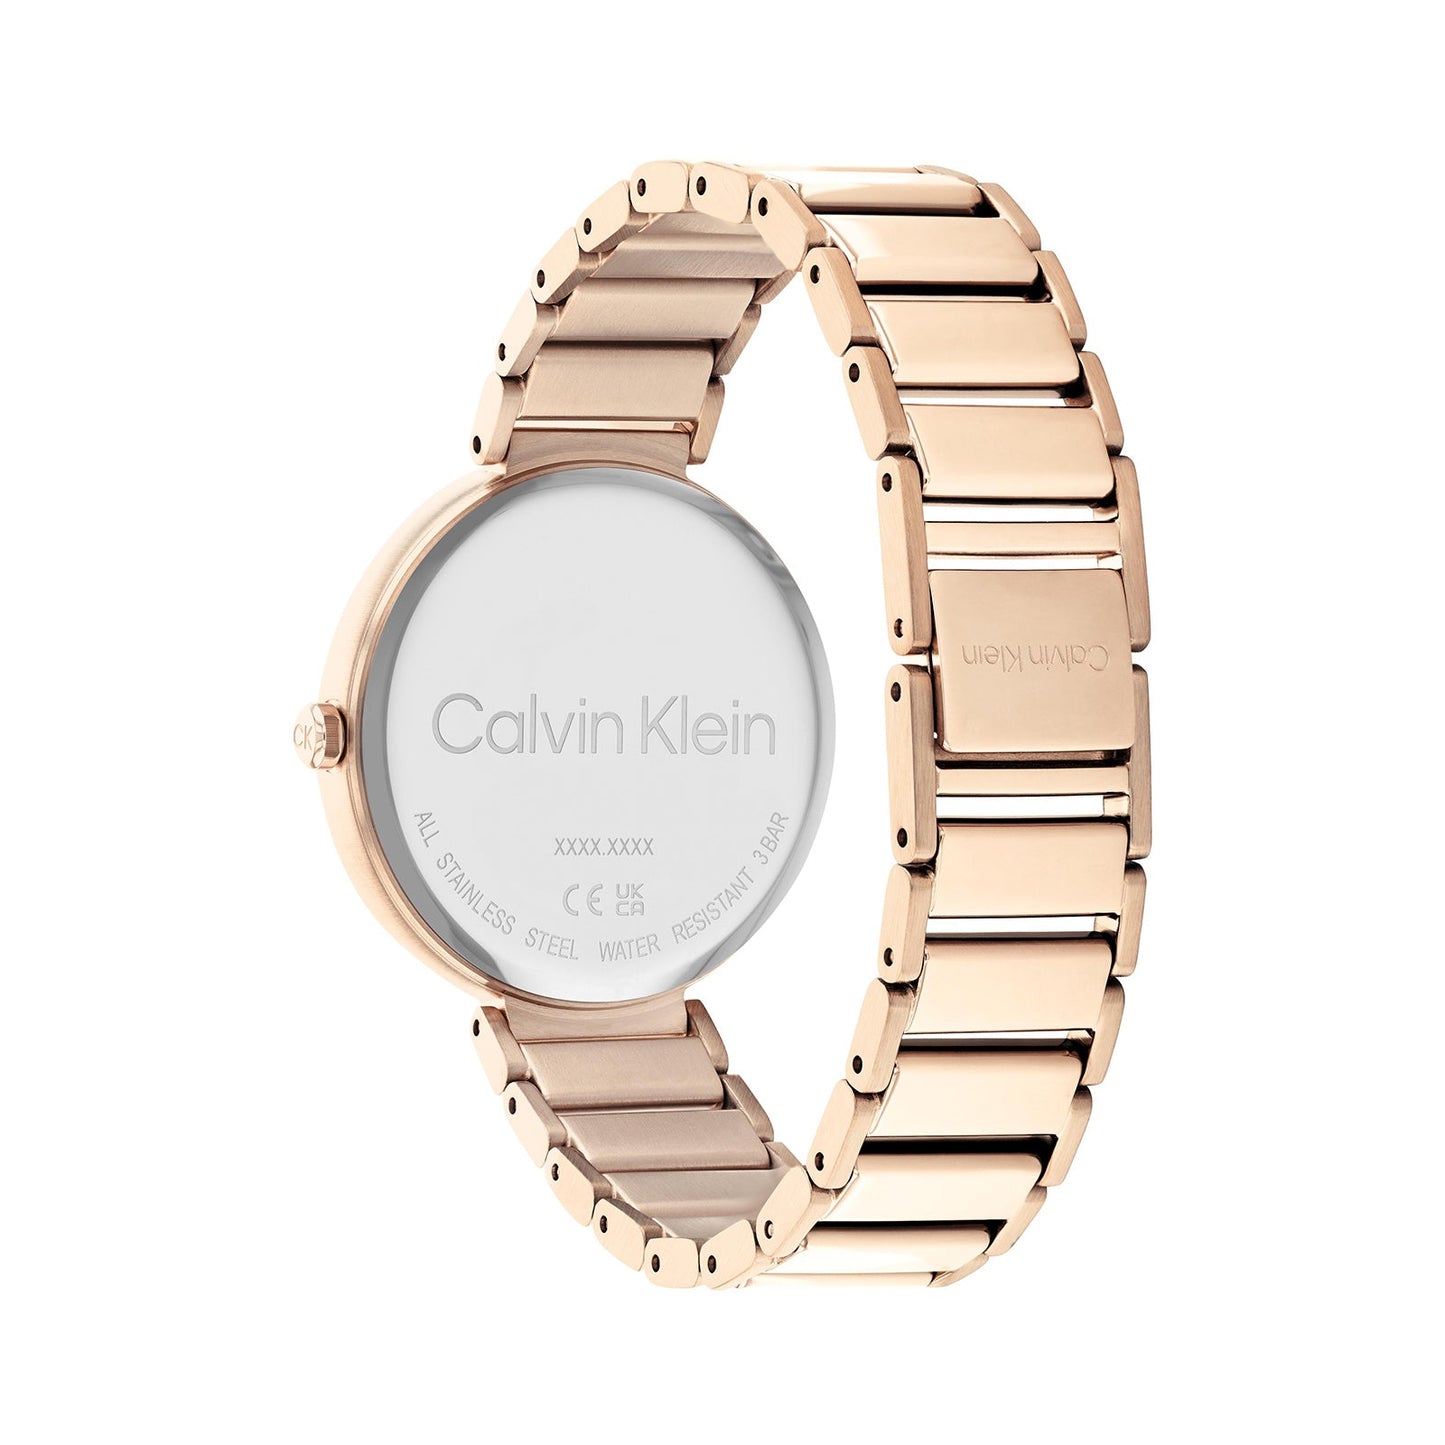 Calvin Klein 25200135 Women's Steel Watch